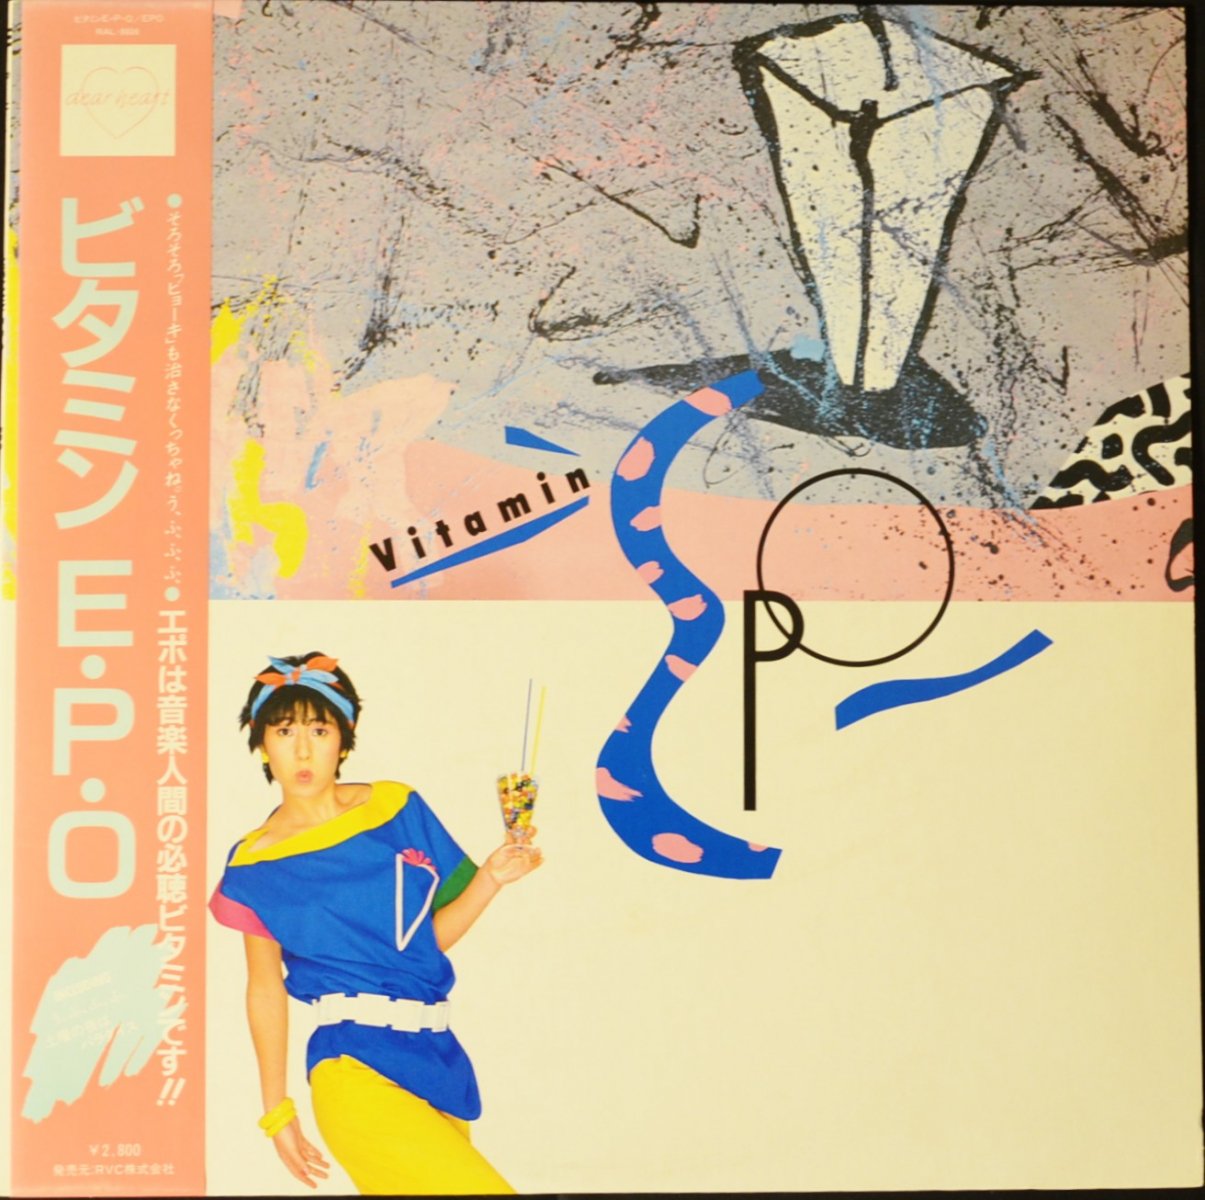 エポ EPO / ビタミン E・P・O / VITAMIN E・P・O (LP) - HIP TANK RECORDS